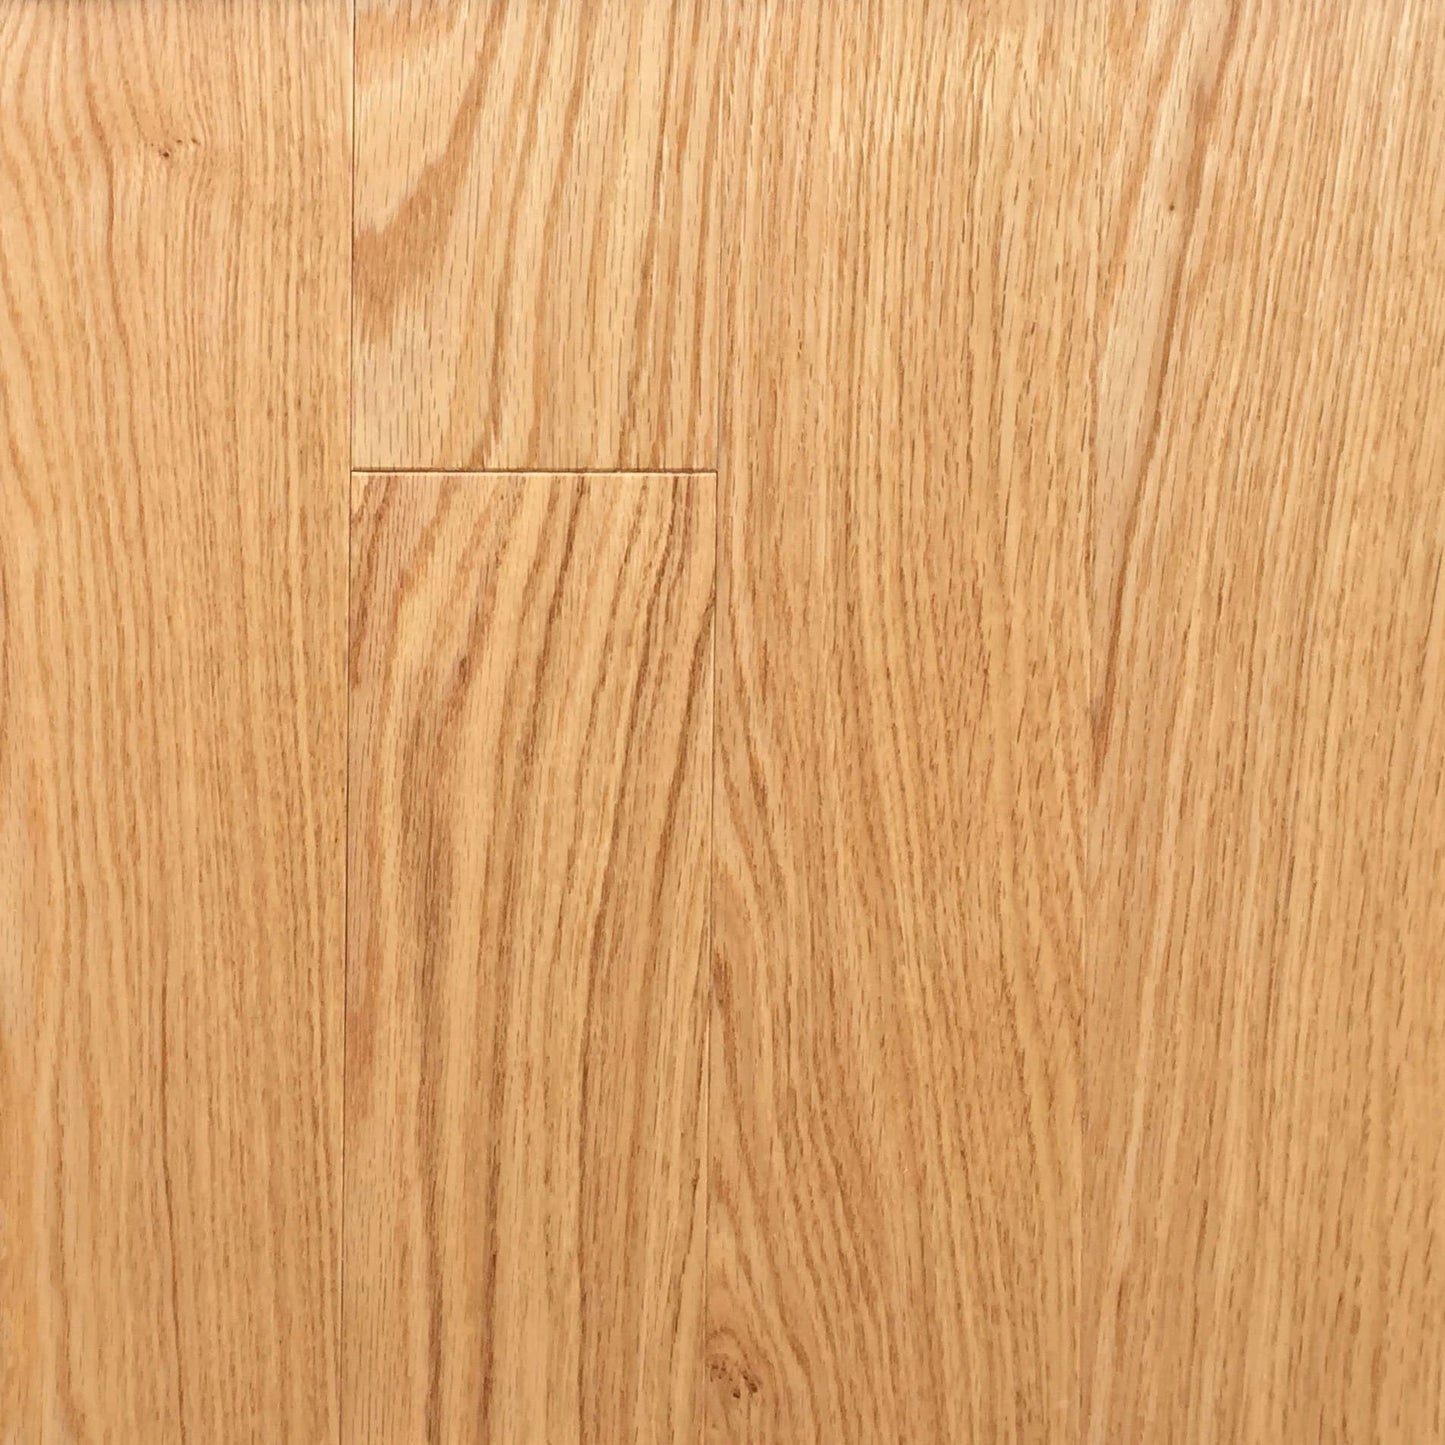 Hardwood Planet Red Oak Collection Wire Brushed Select & Better Natural Hardwood Flooring